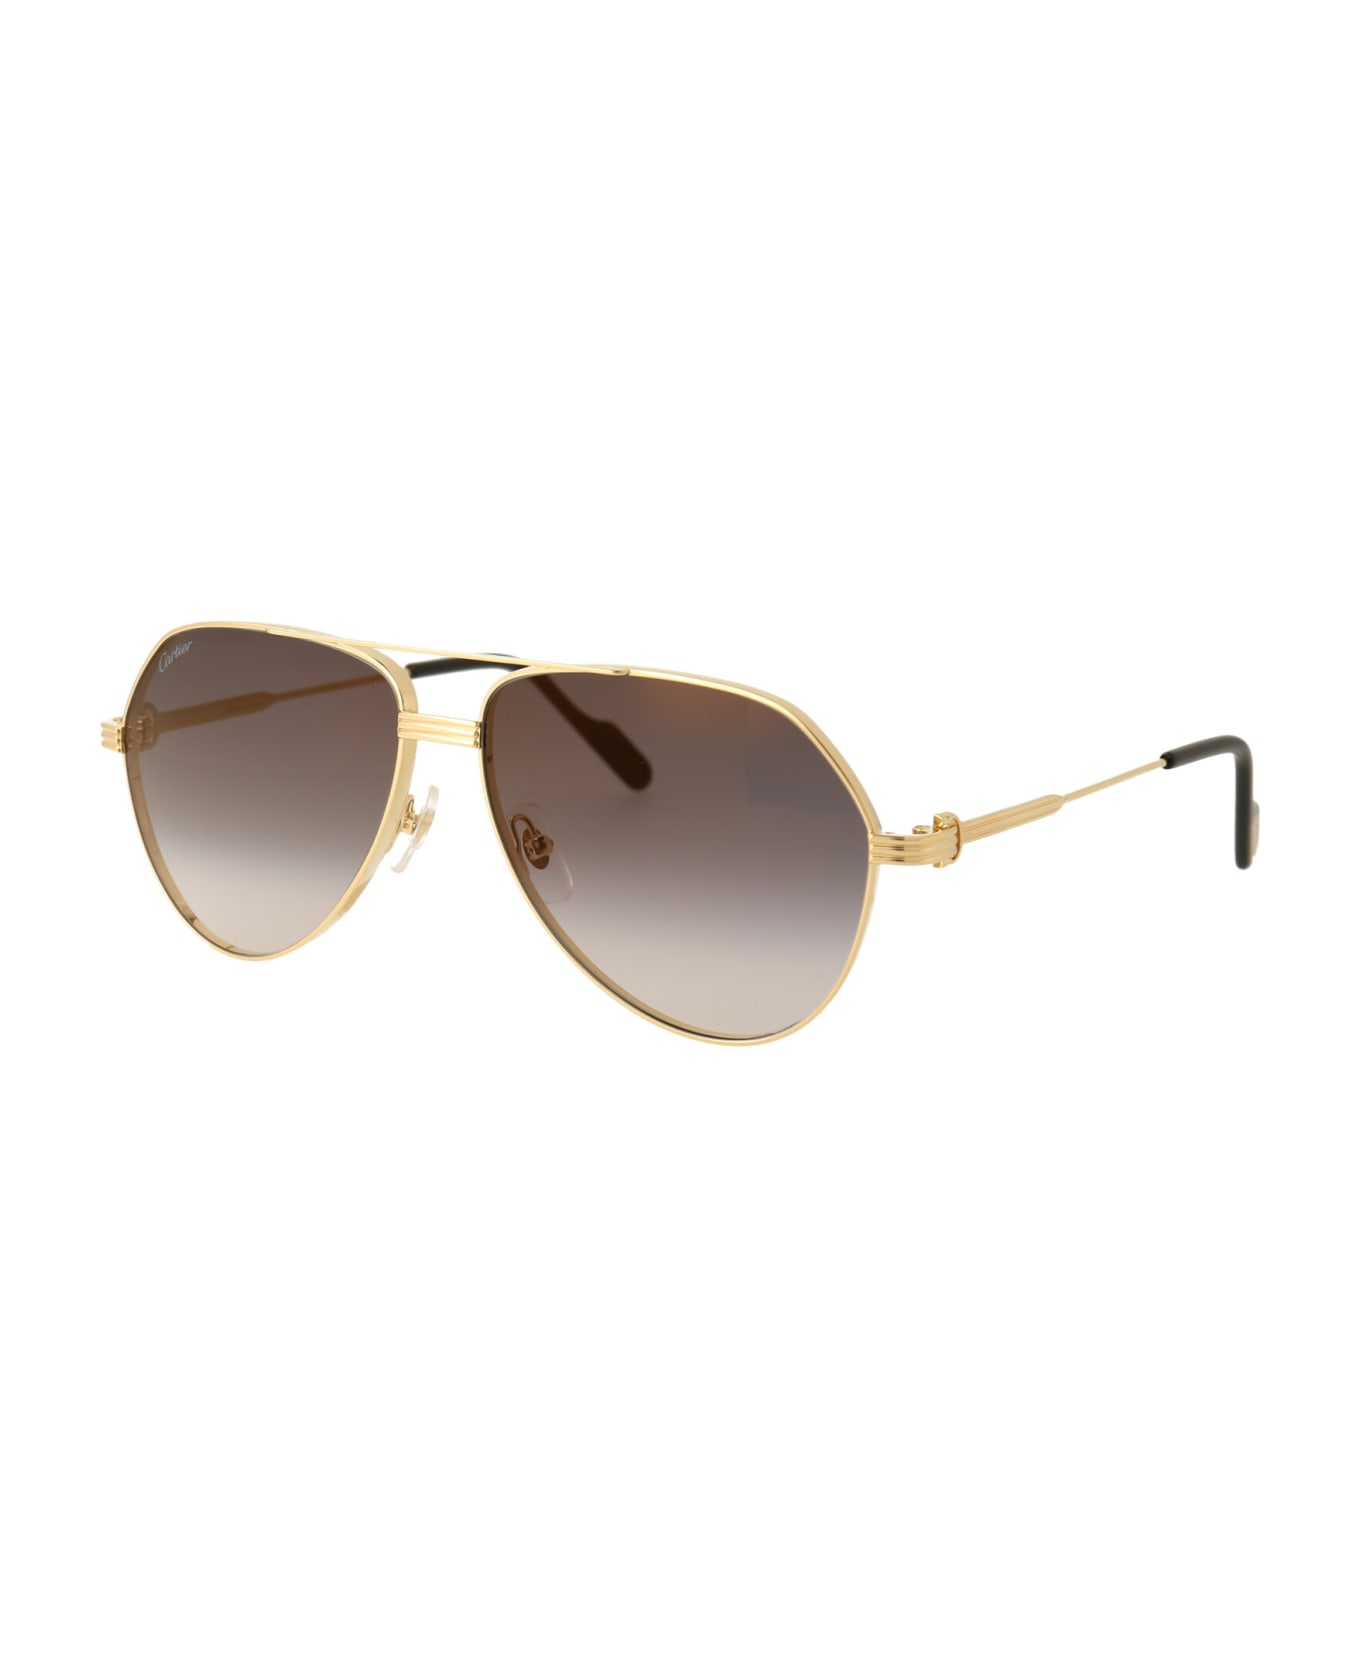 Cartier Eyewear Ct0303s Sunglasses - 001 GOLD GOLD GREY